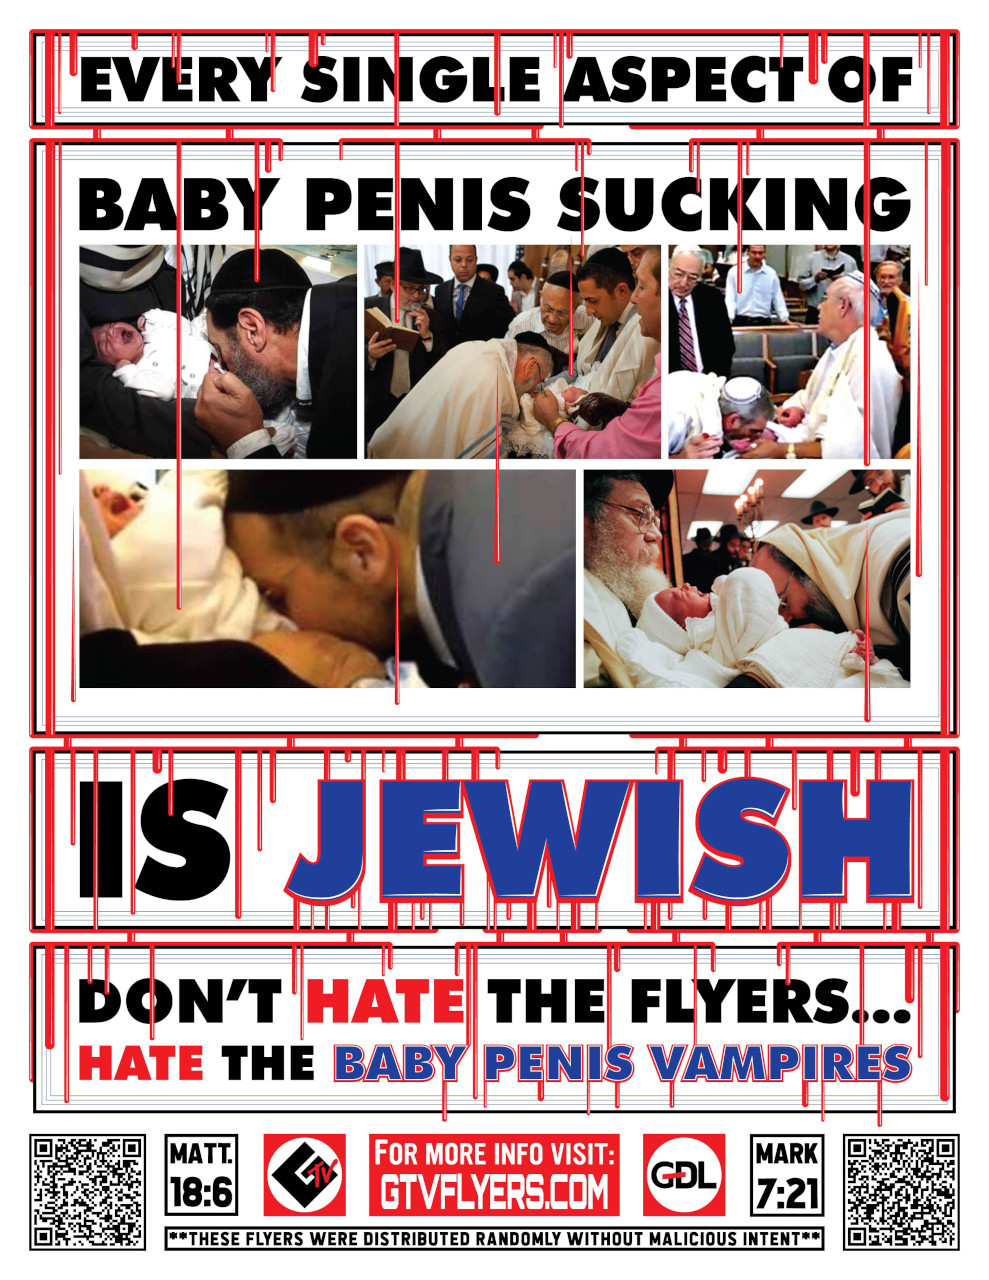 Every-Single-Aspect-of-Baby-Penis-Sucking-is-Jewish-1.jpg